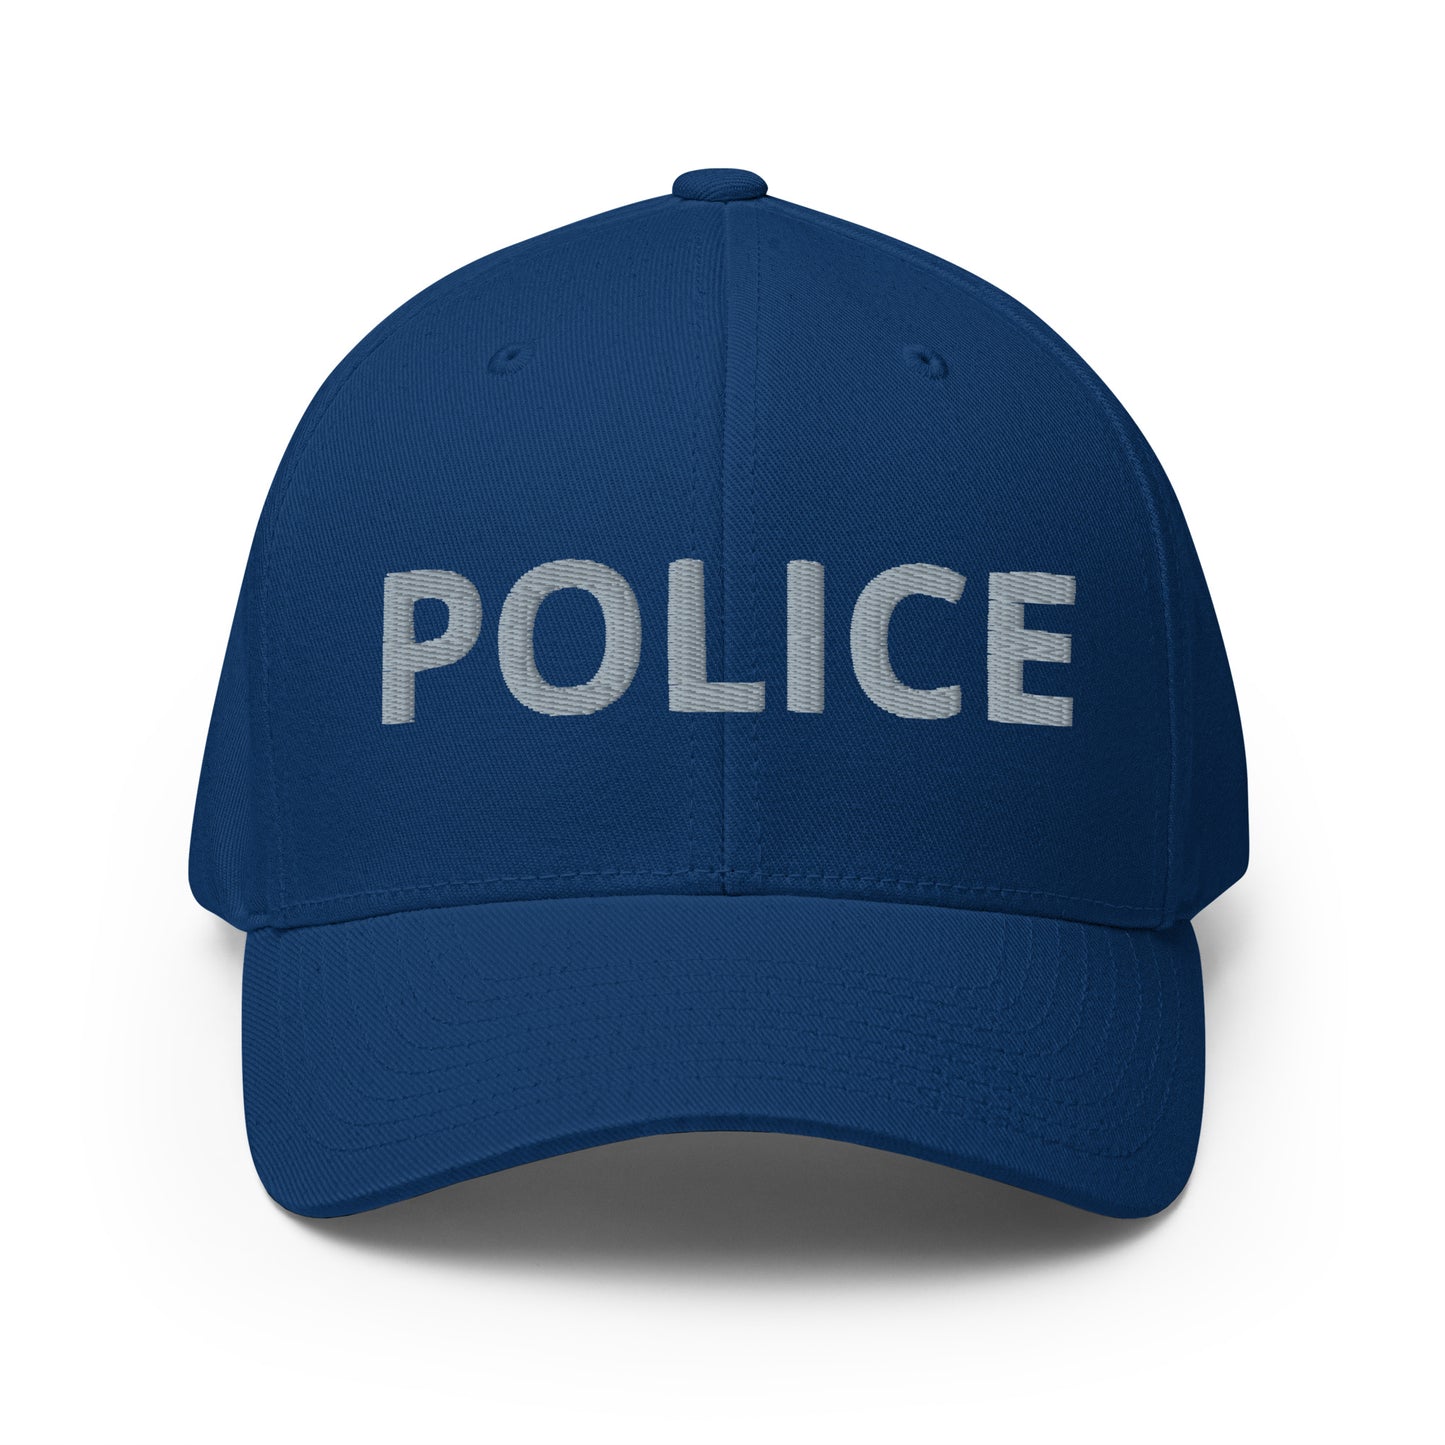 Police Duty Flexfit Baseball Cap-911 Duty Gear USA-911 Duty Gear USA